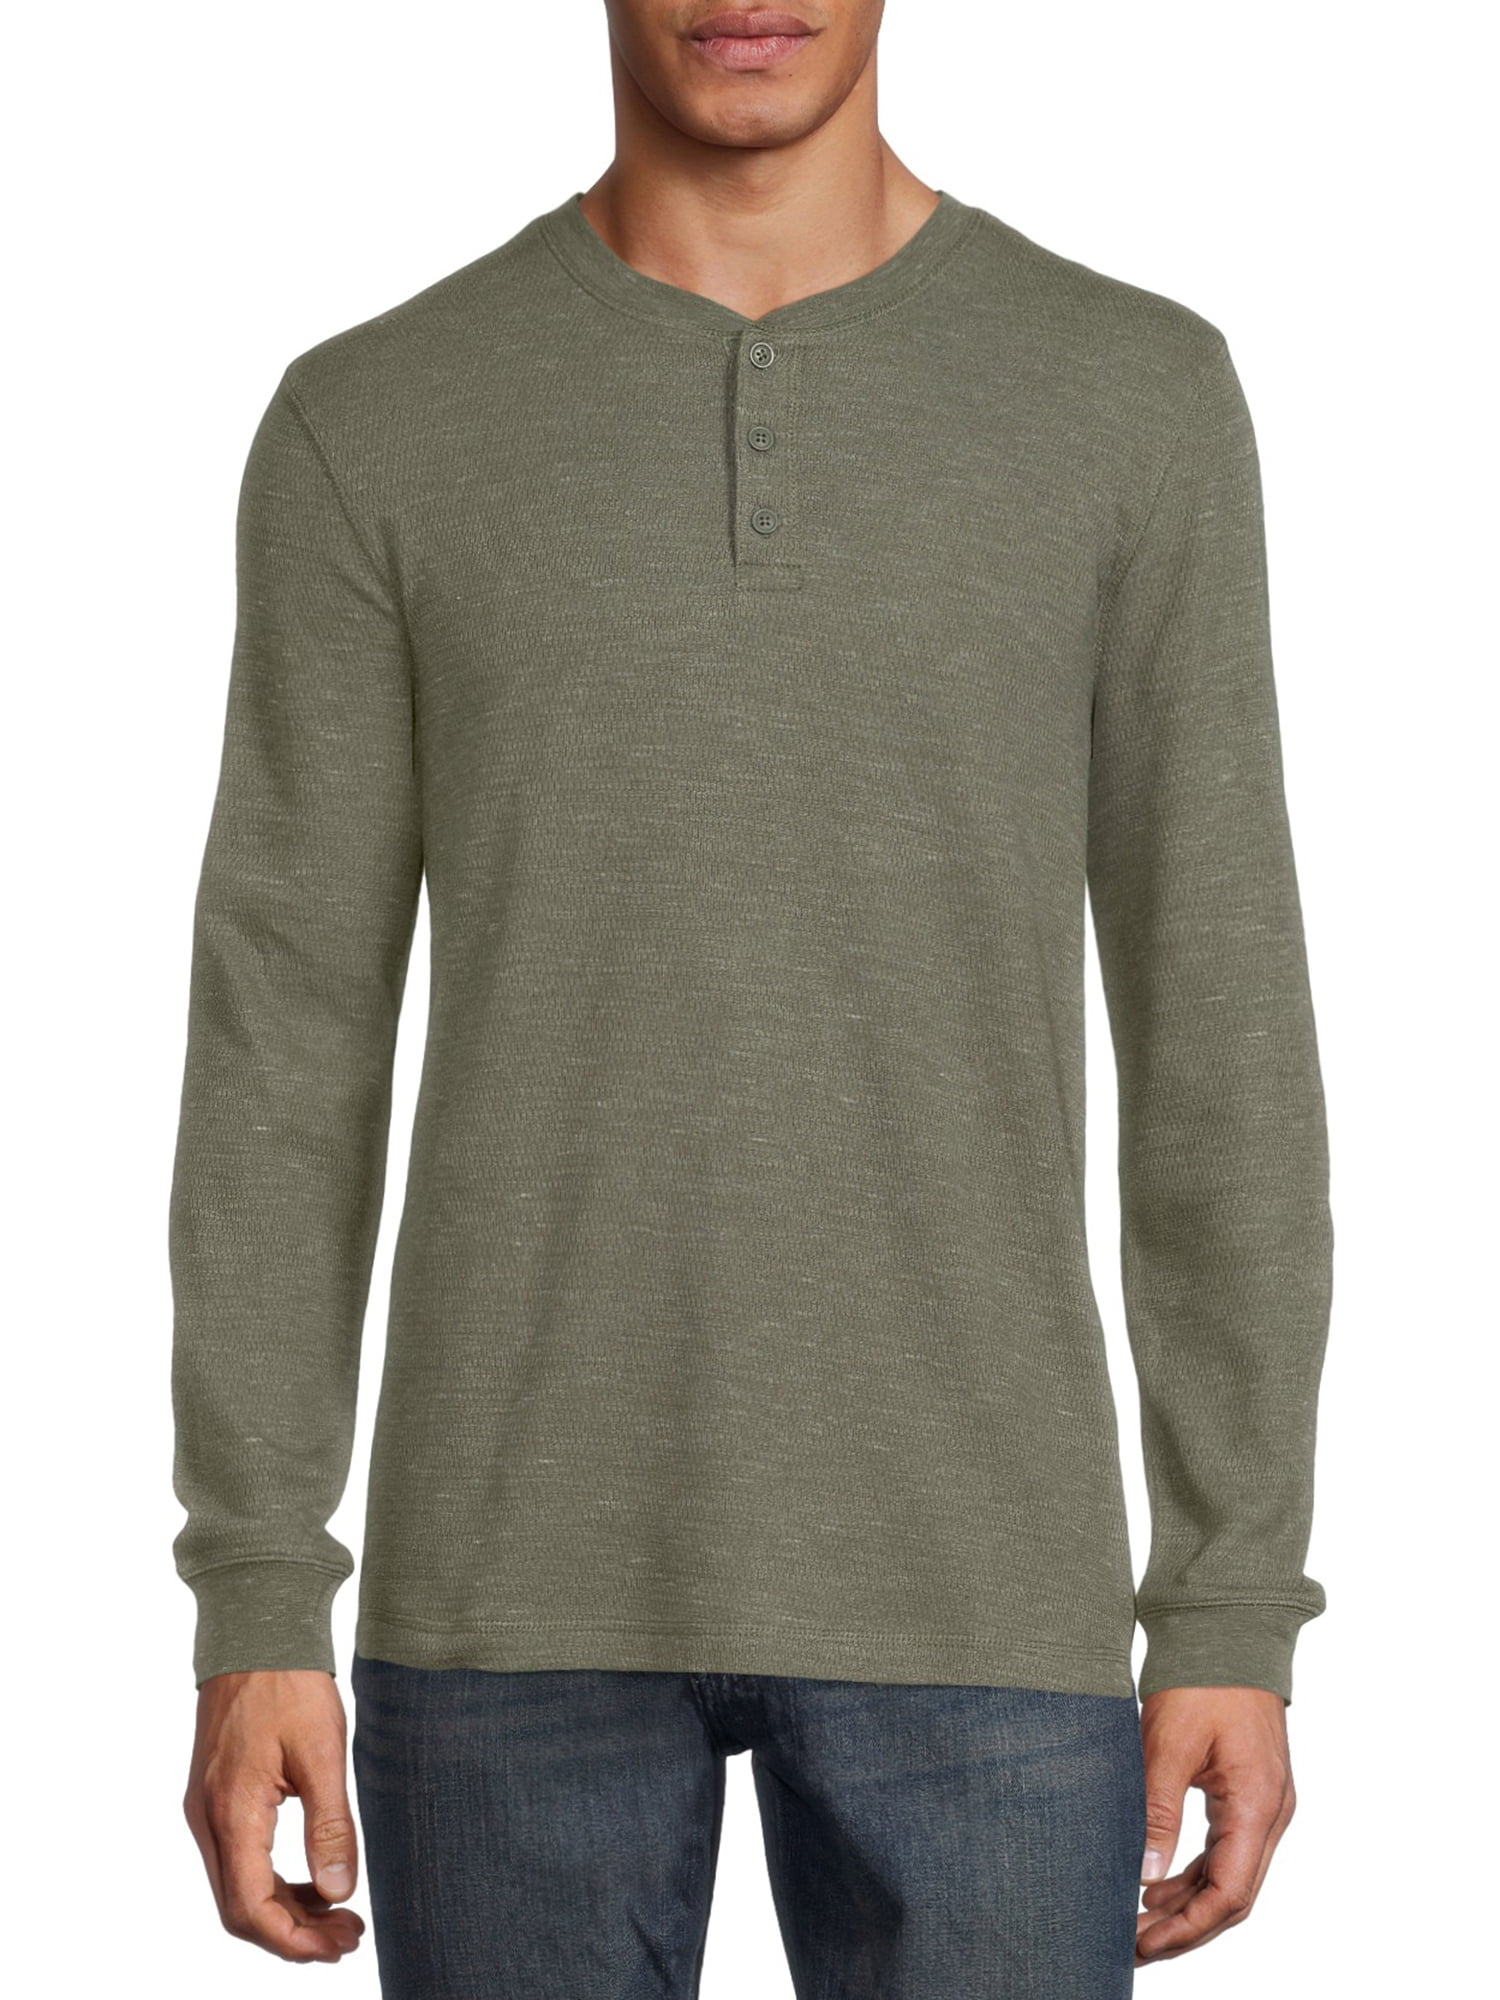 George Men's and Big Men's Long Sleeve Thermal Henley Shirt - Walmart.com